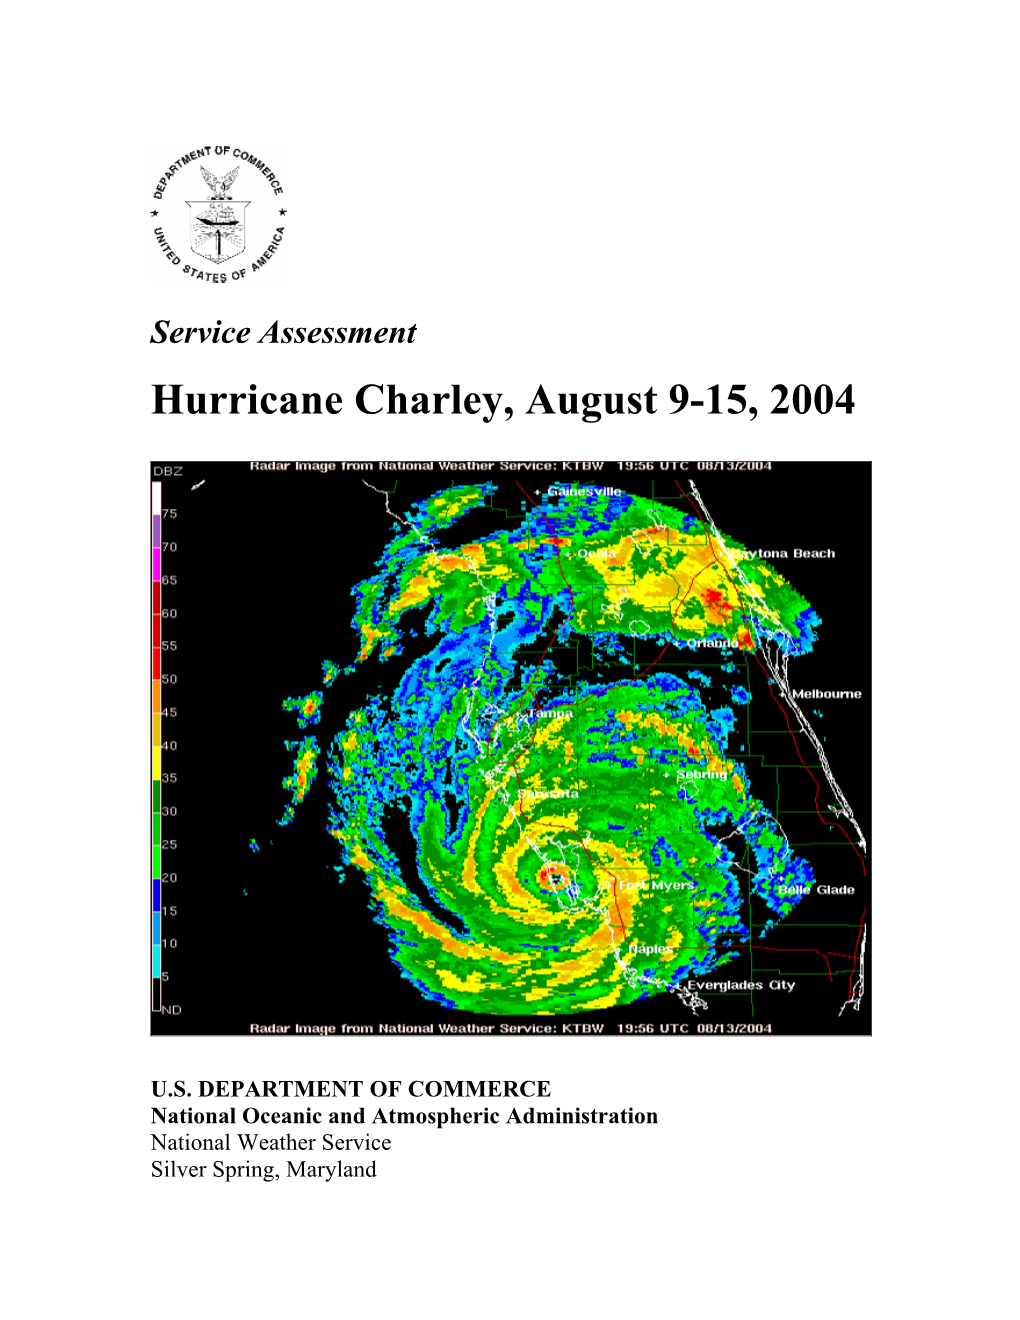 Hurricane Charley, August 9-15, 2004